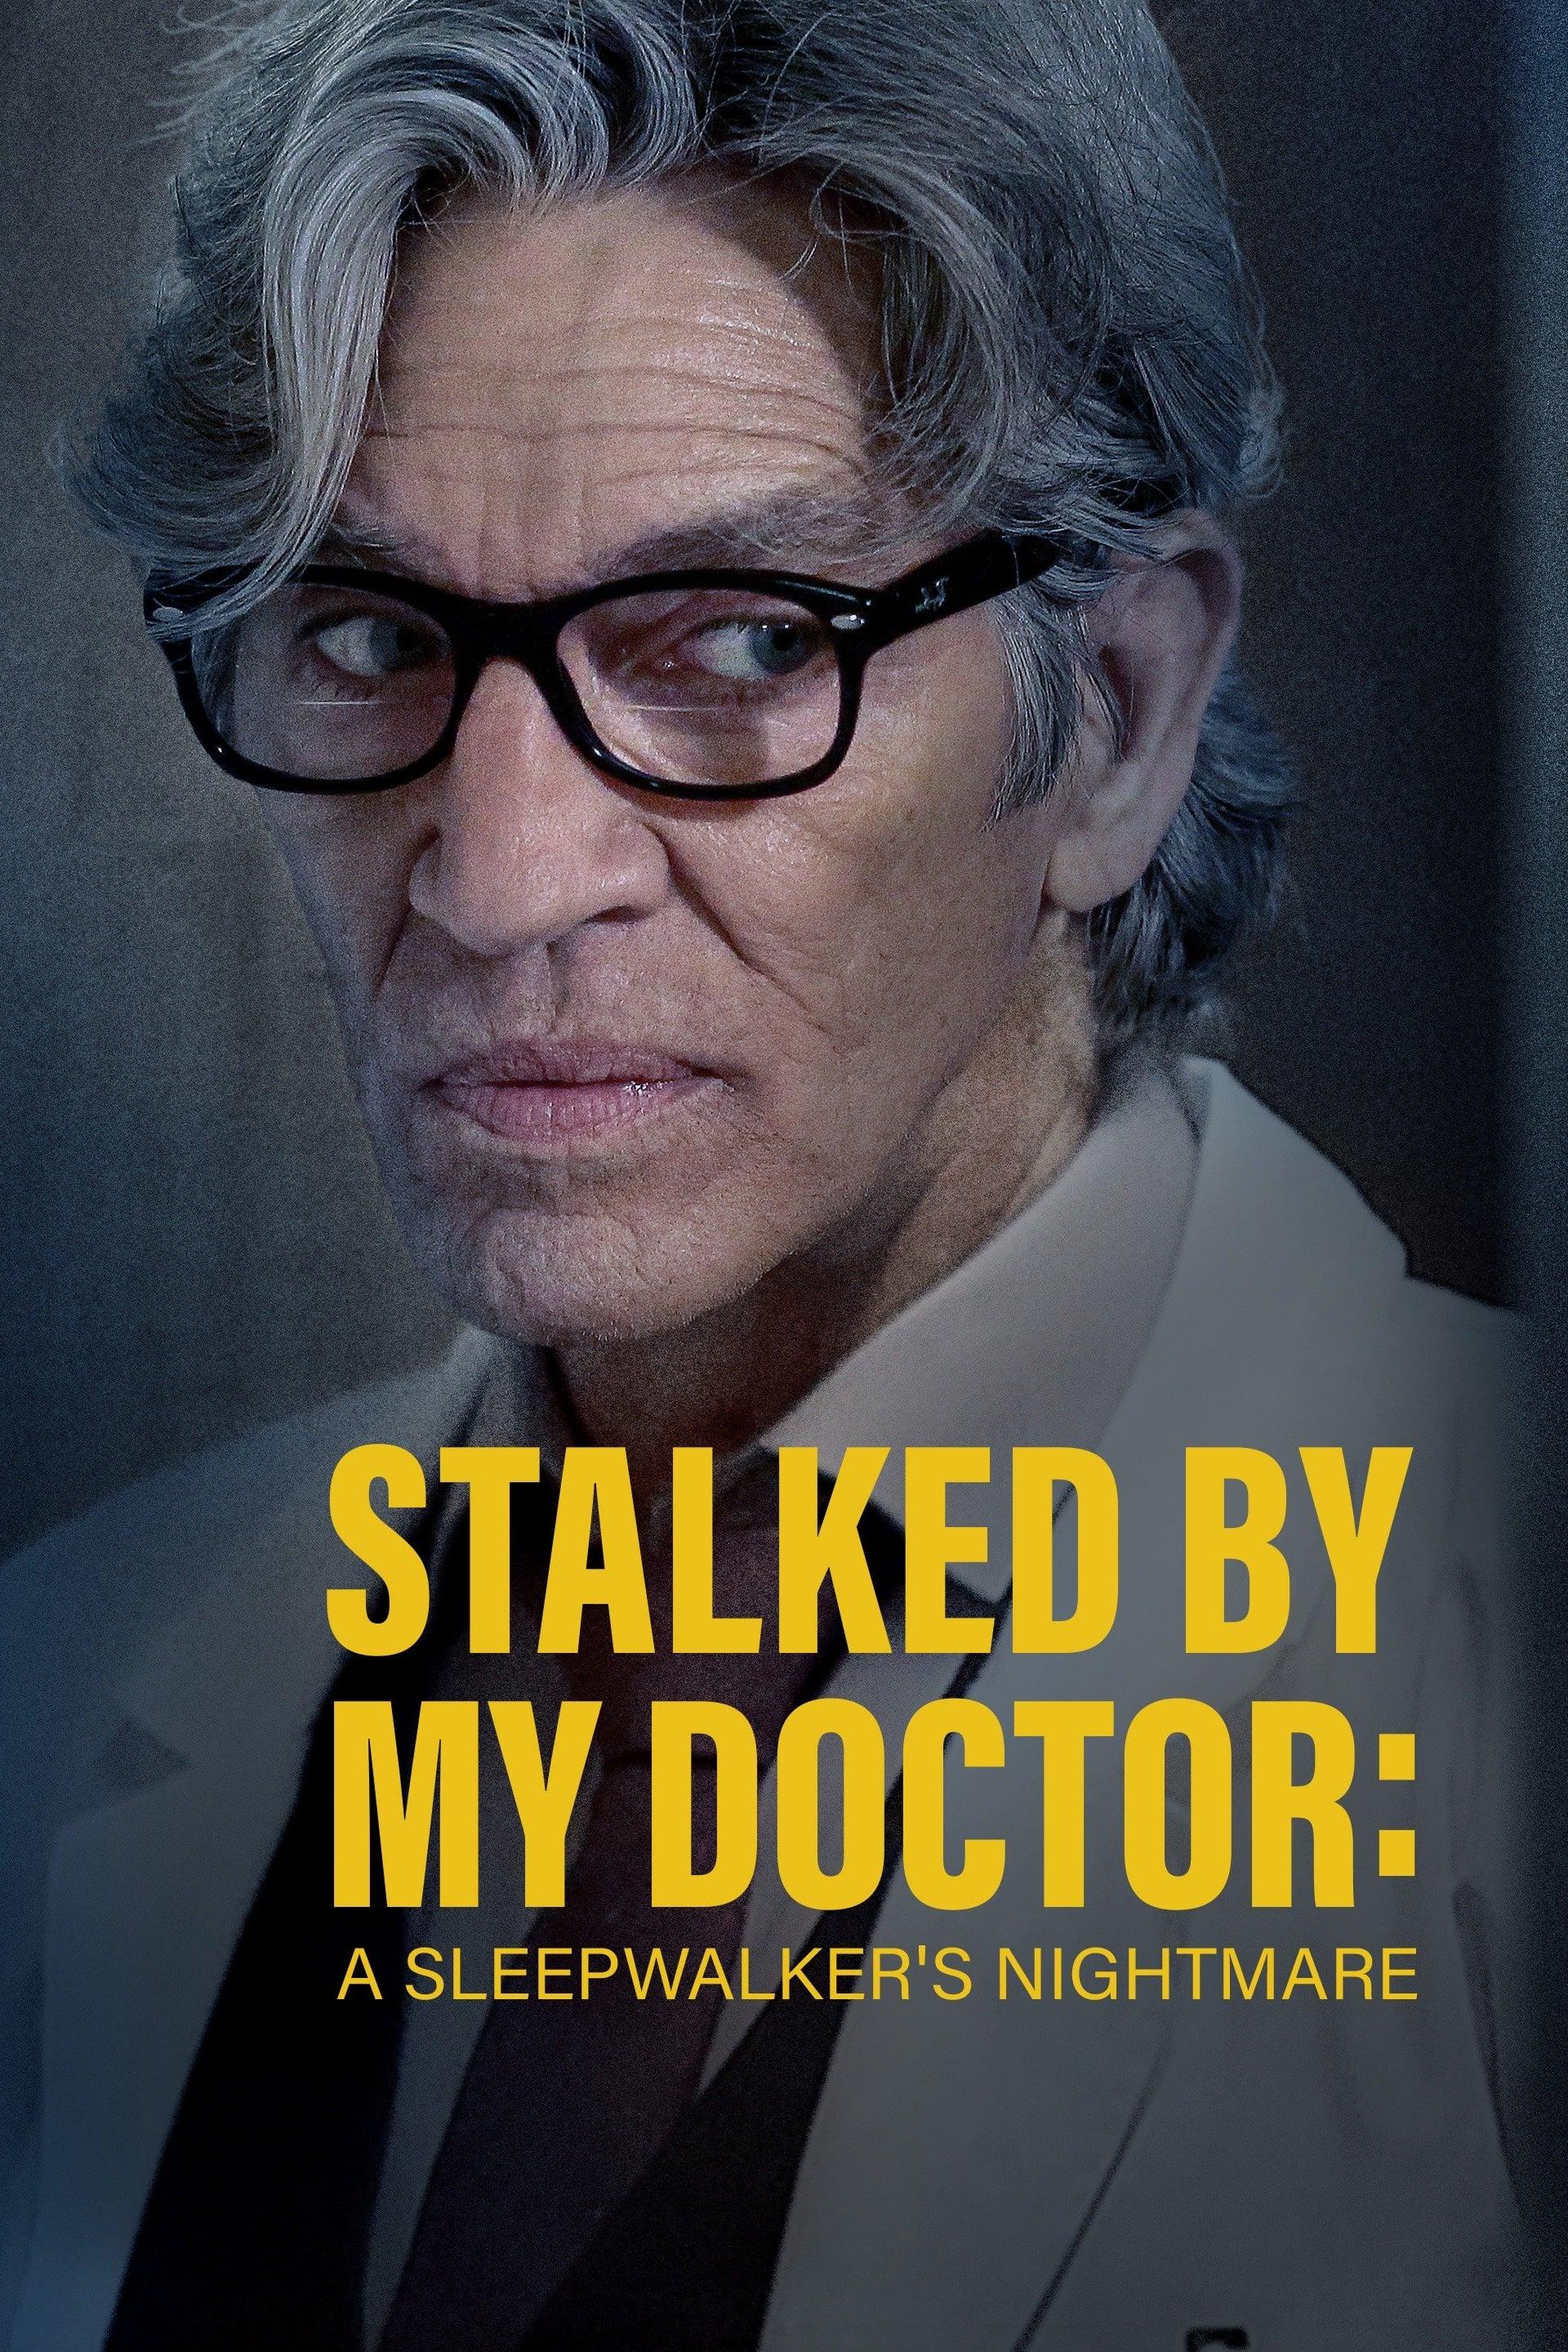 Stalked by My Doctor: A Sleepwalker's Nightmare poster